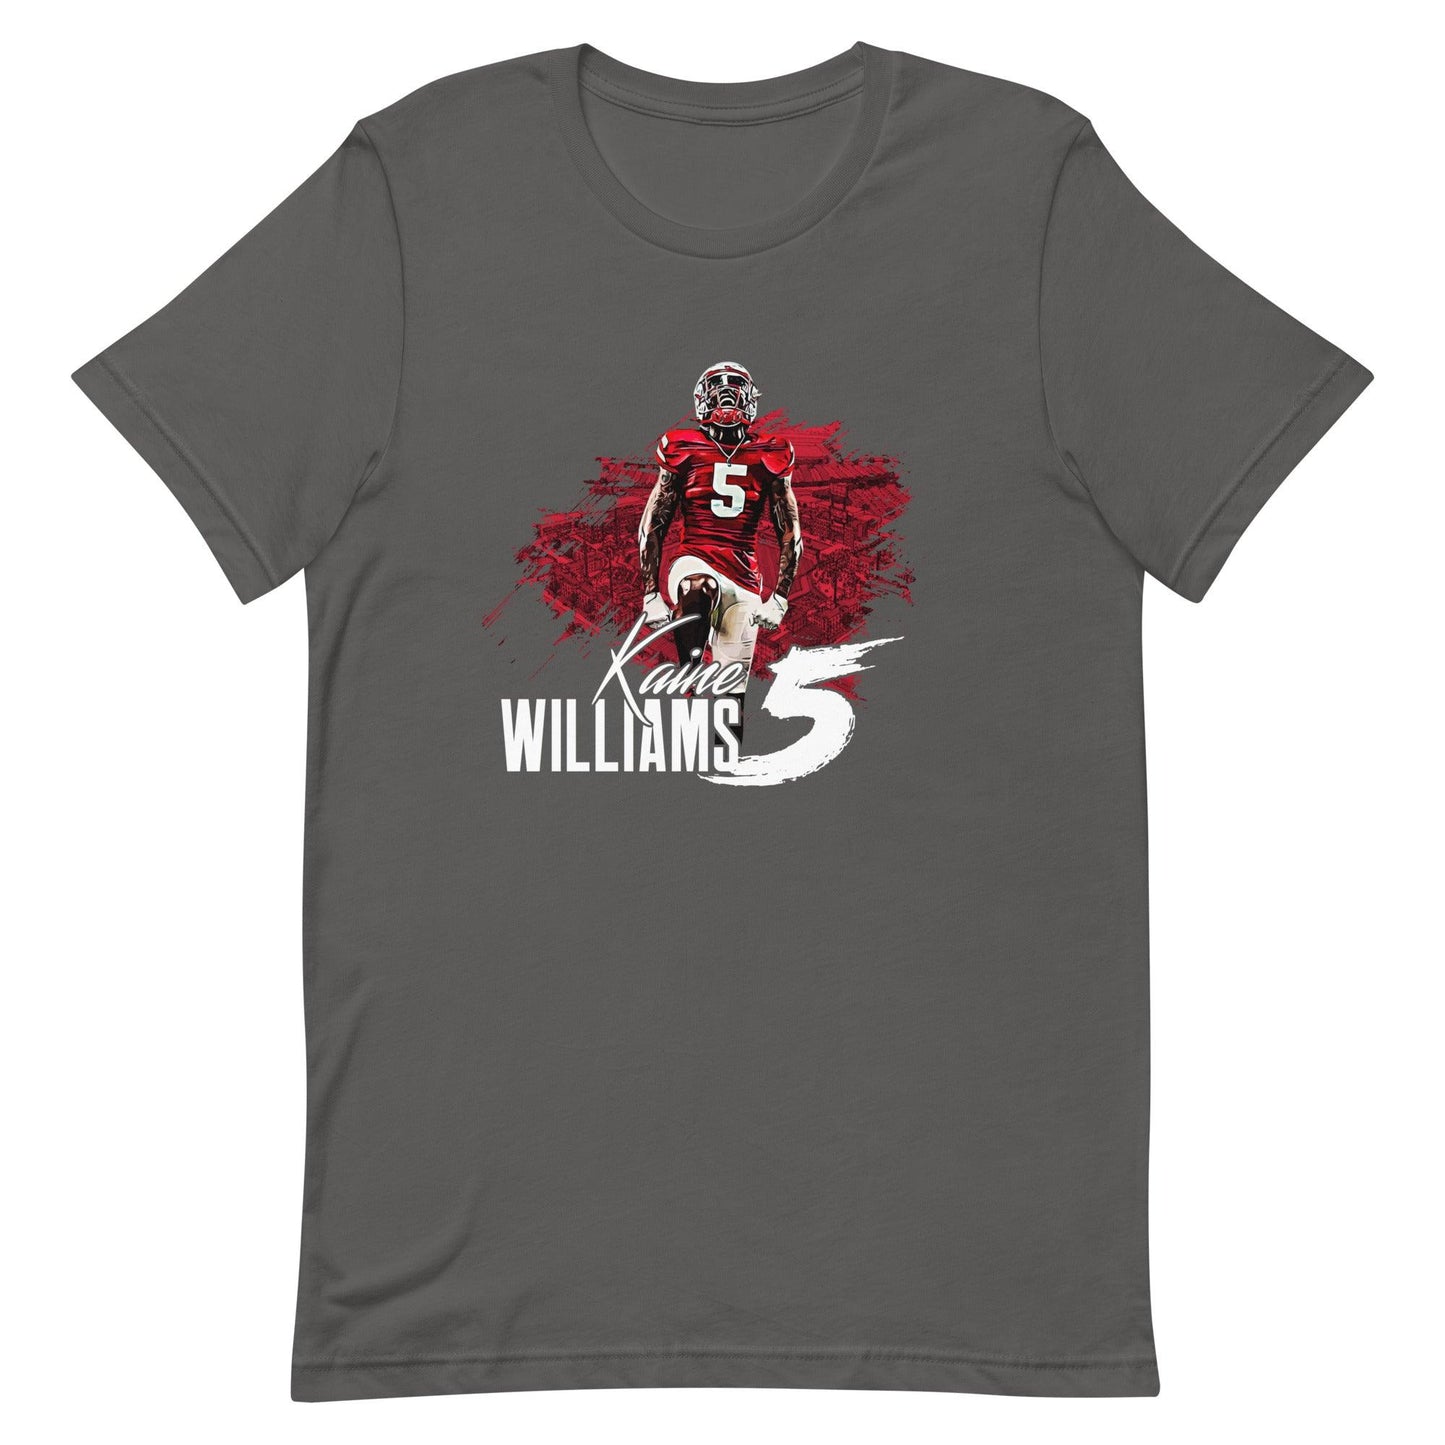 Kaine Williams "We Ready" t-shirt - Fan Arch